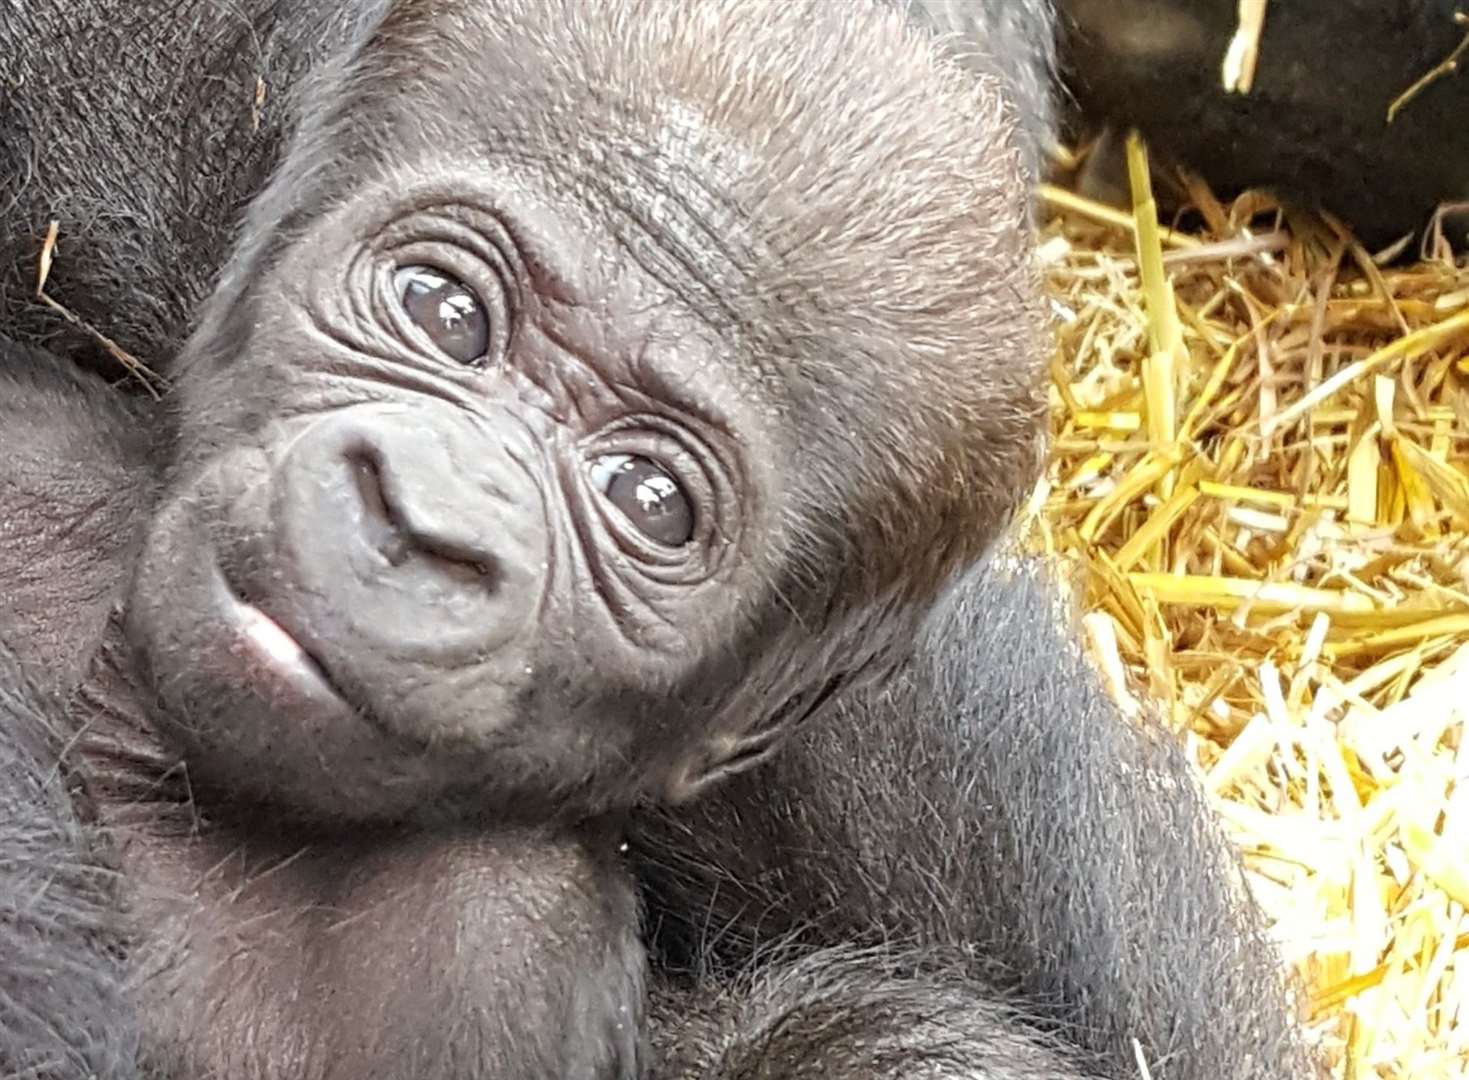 Baby gorilla born at Howletts in 2016